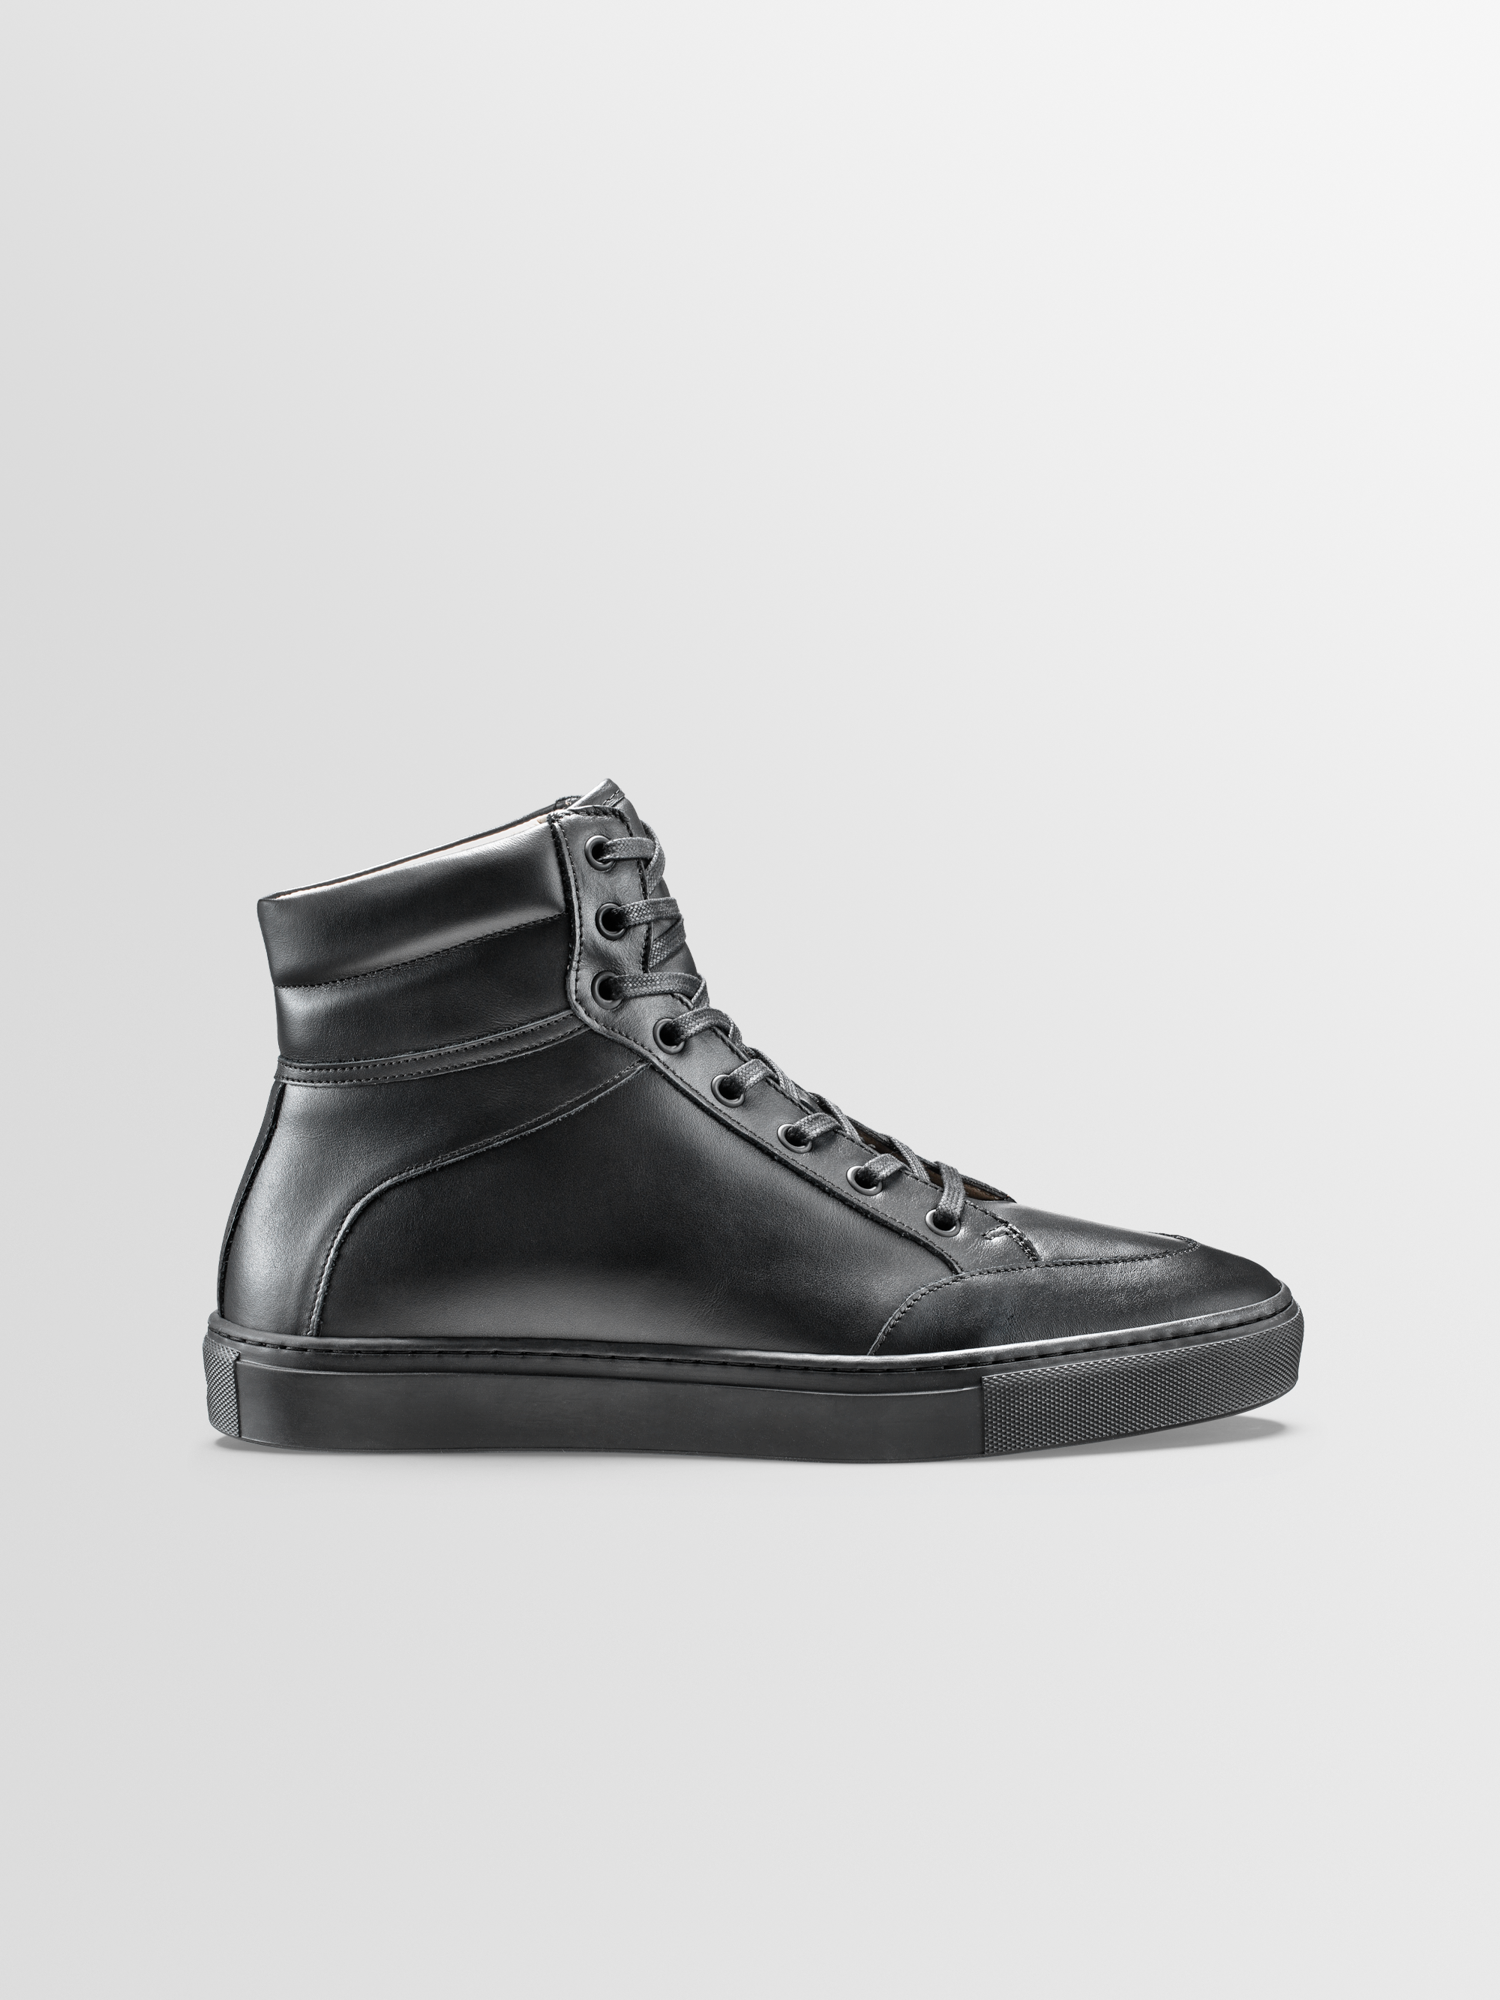 Men's Casual Sneakers Iconic Black-White | Martin Valen